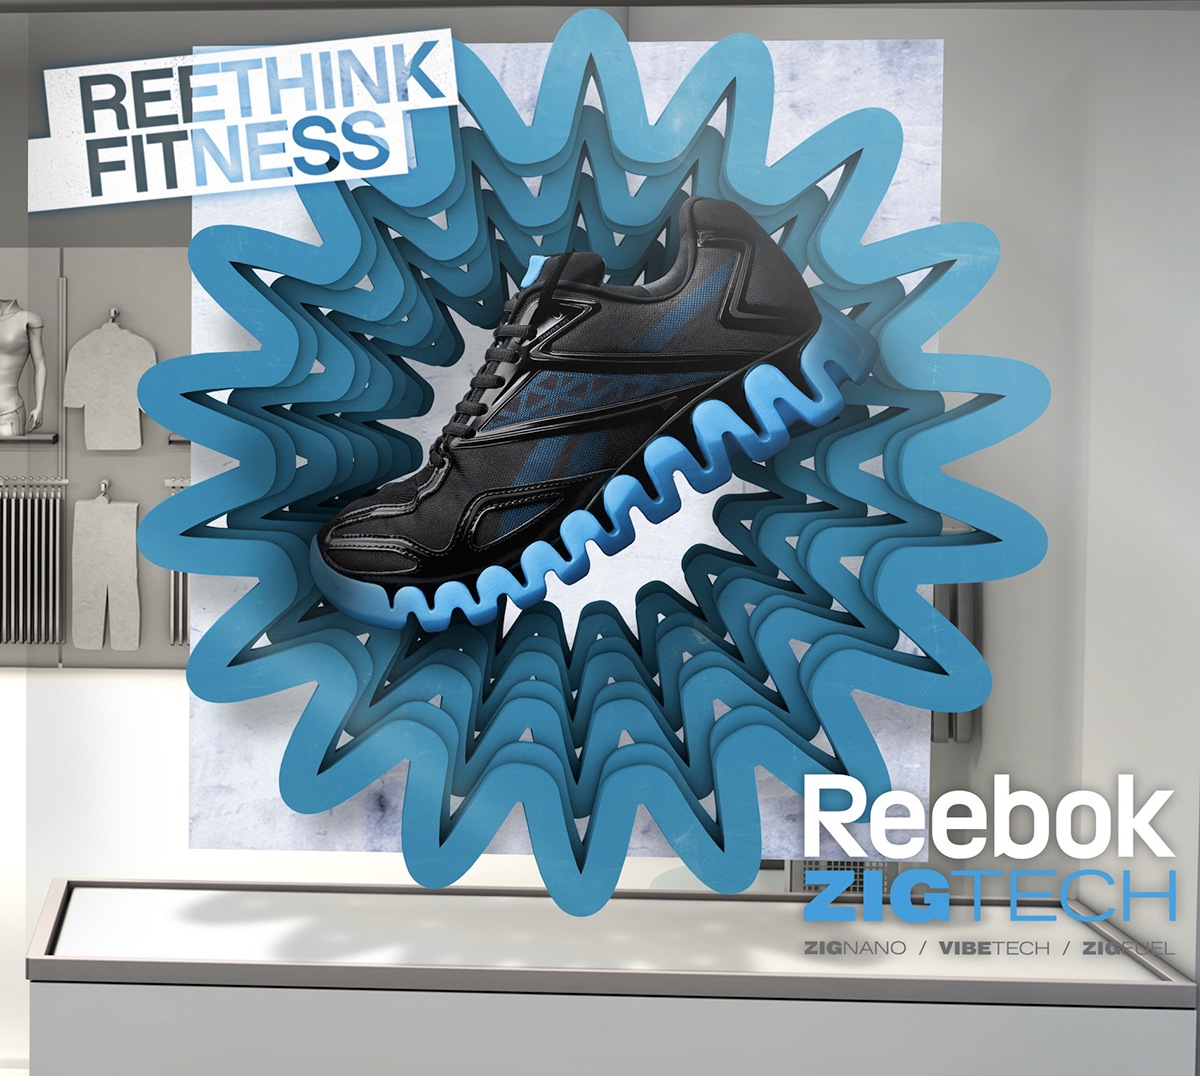 Reebok - Retail Design on Behance